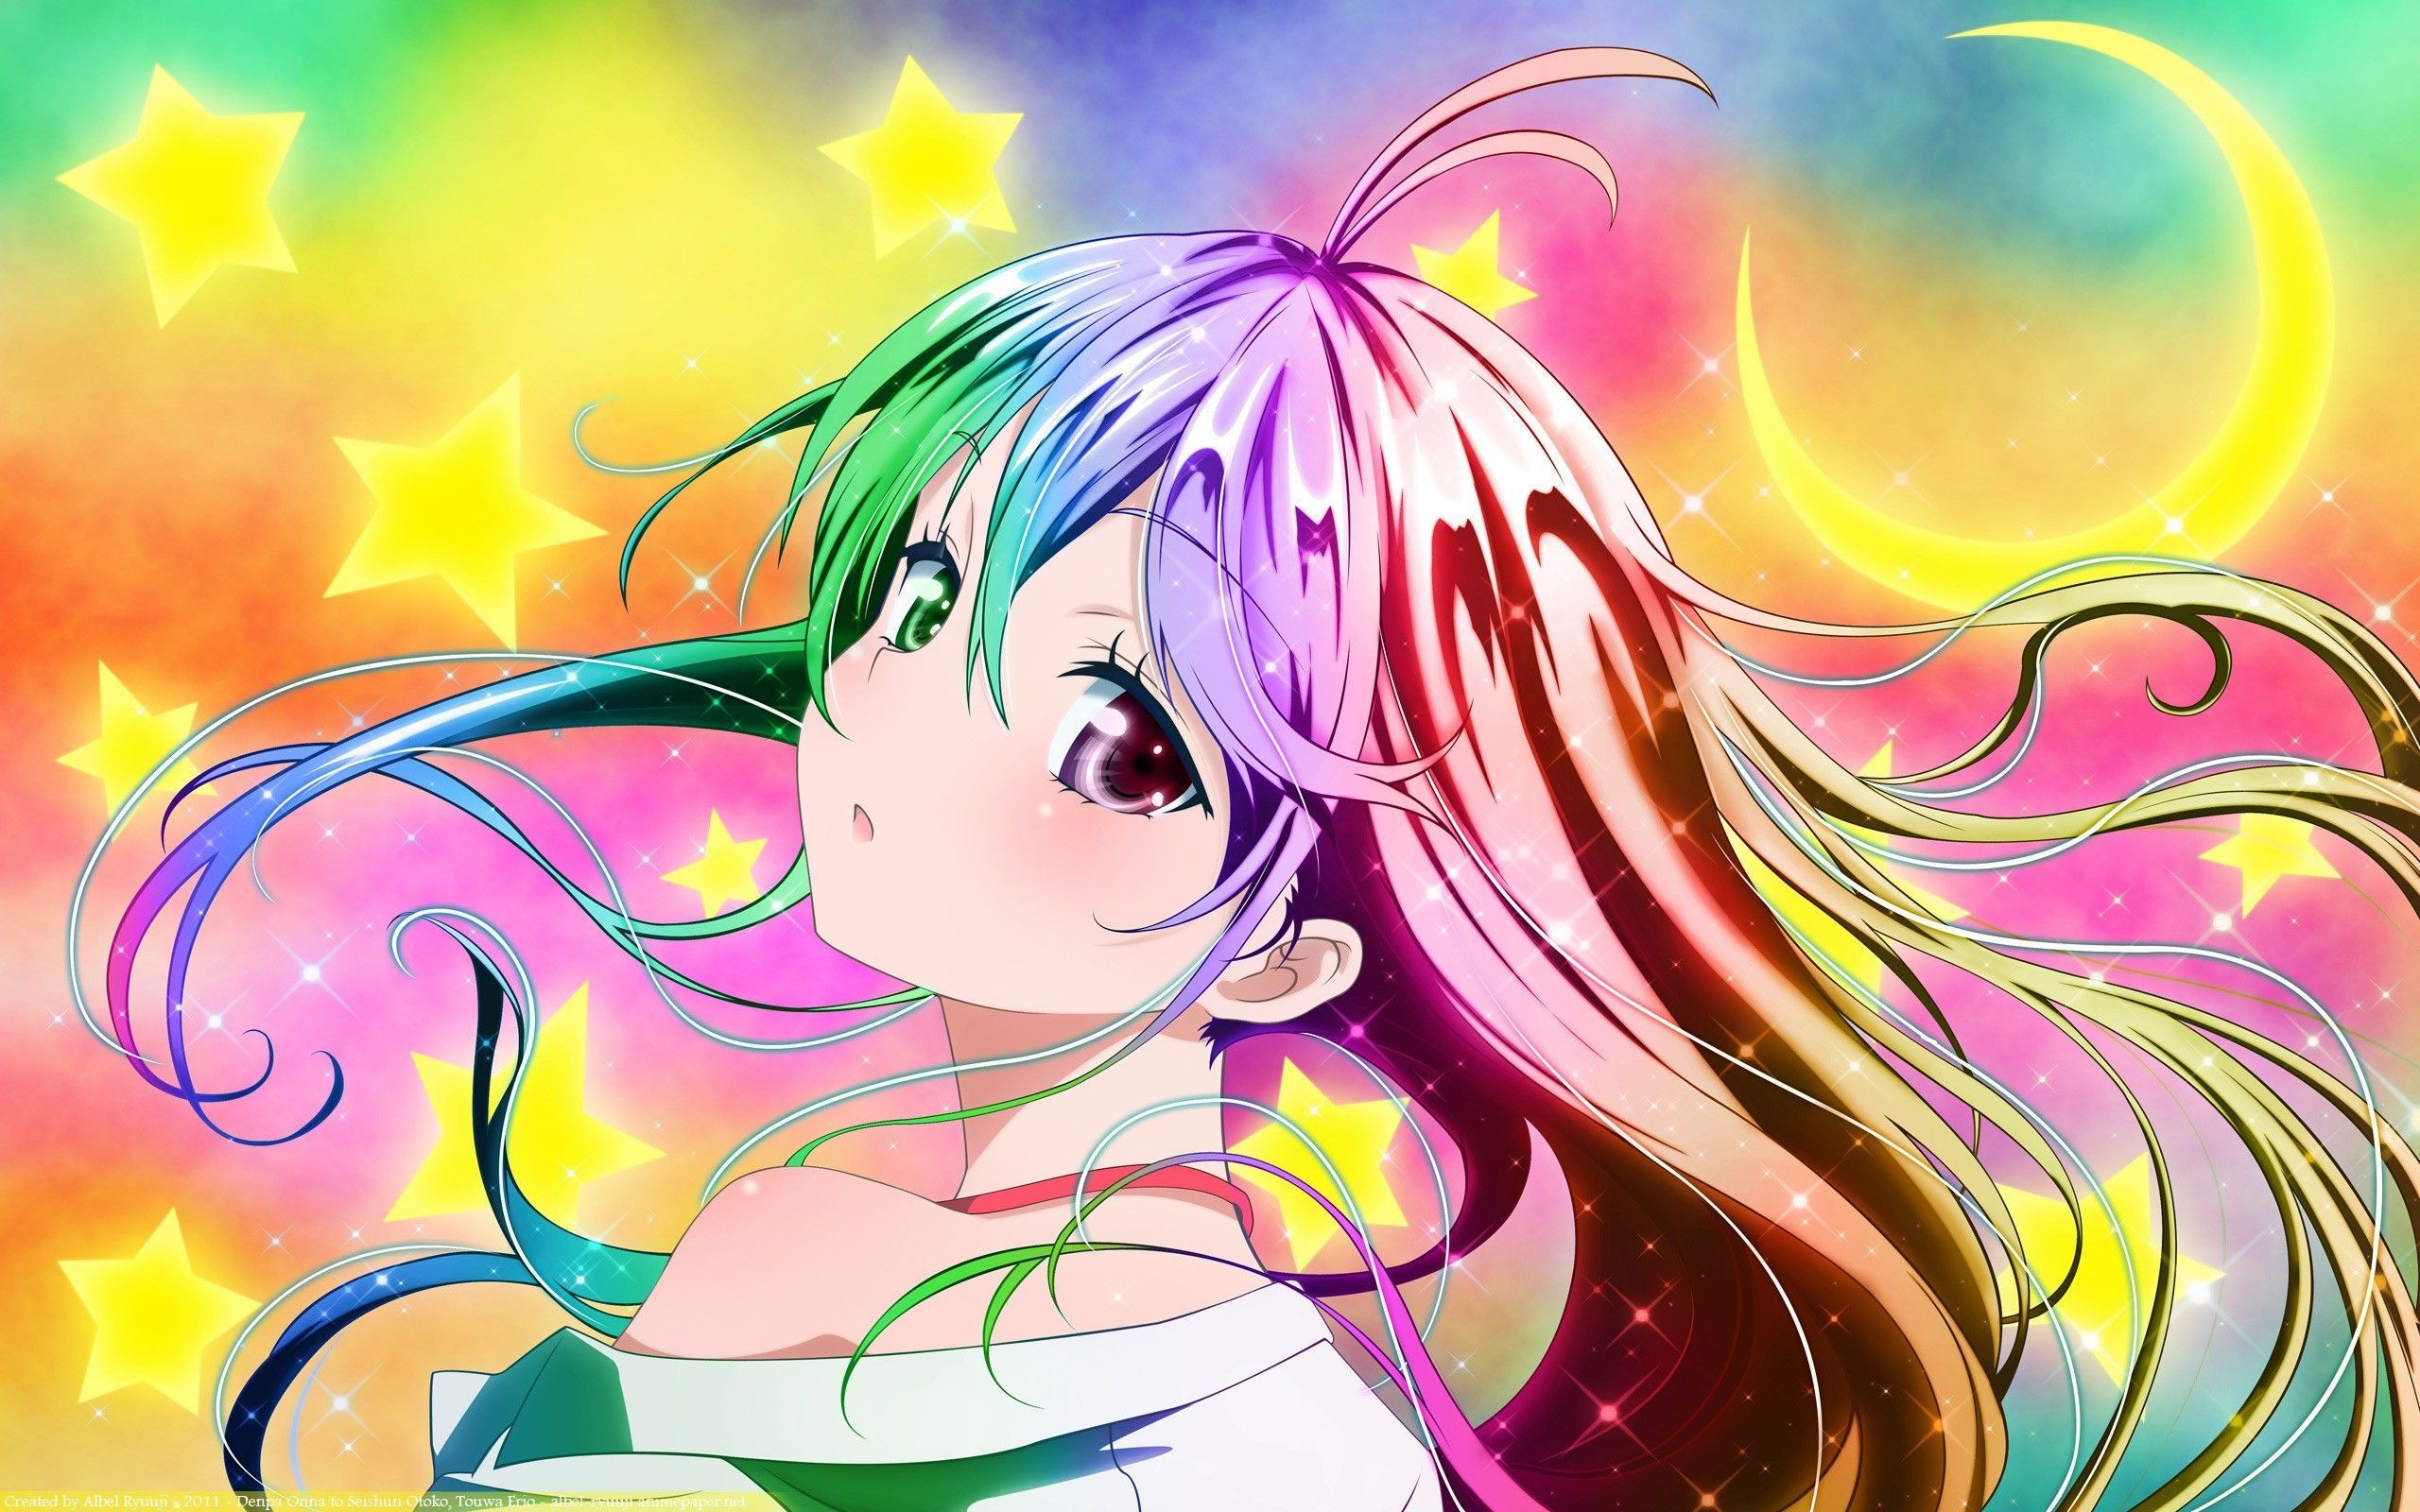 kawaii girl in rainbow scenery wallpaper by xRebelYellx on DeviantArt